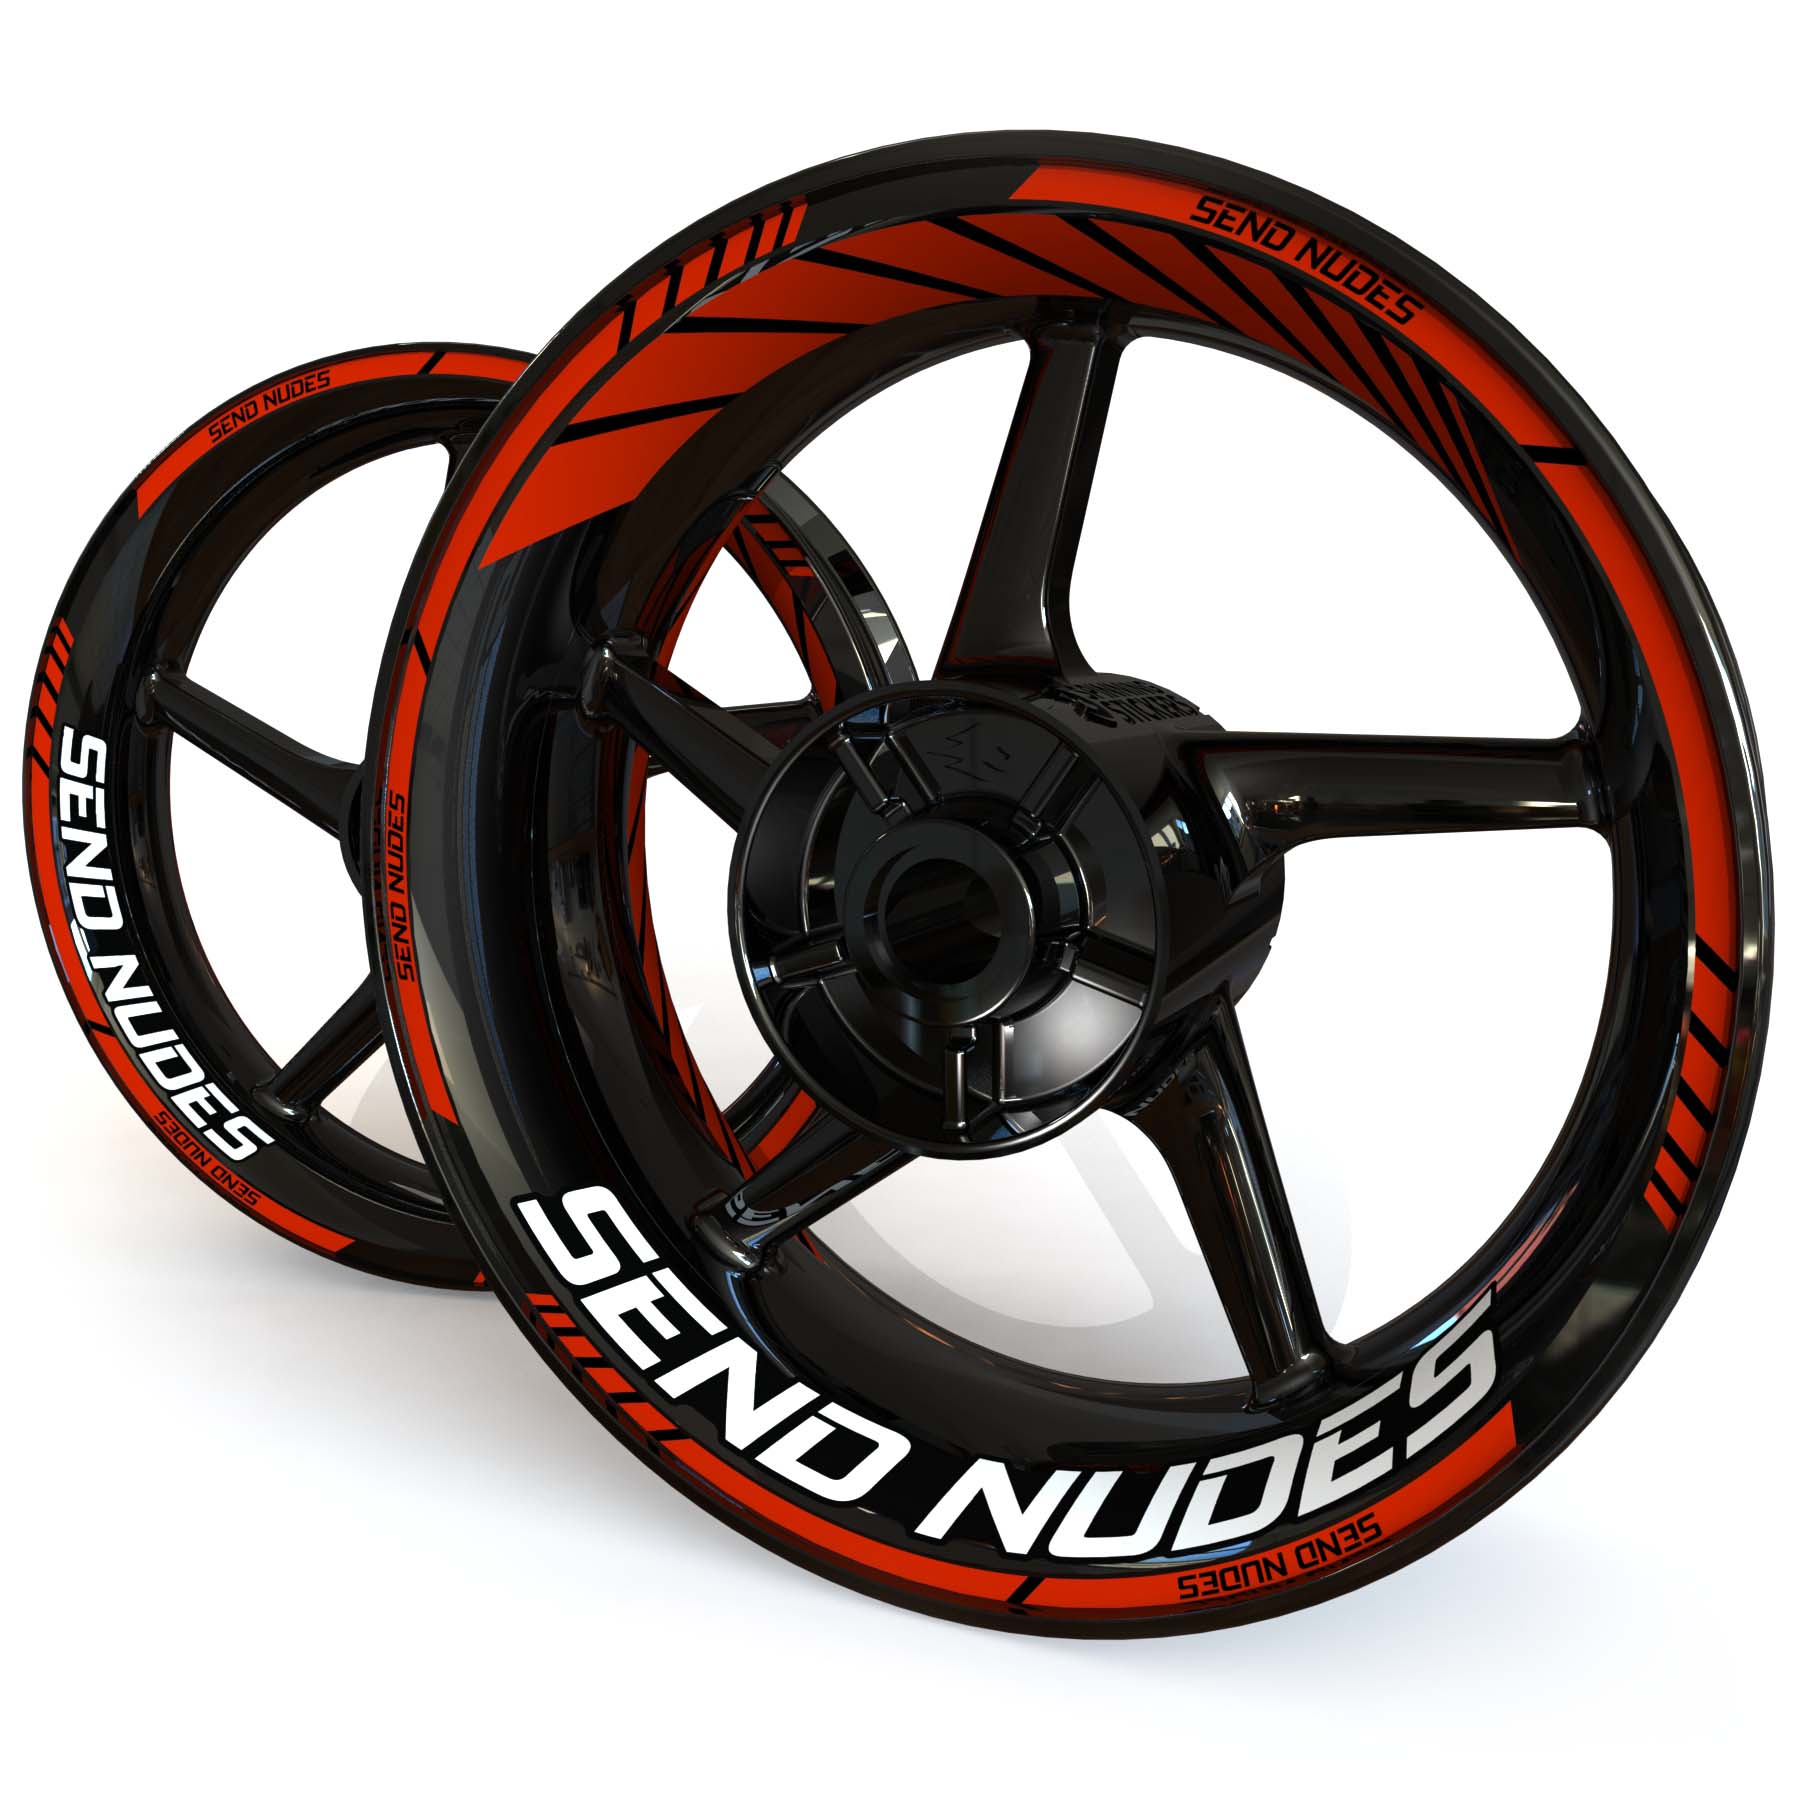 Send Nudes Wheel Stickers - "Classic" Standard design